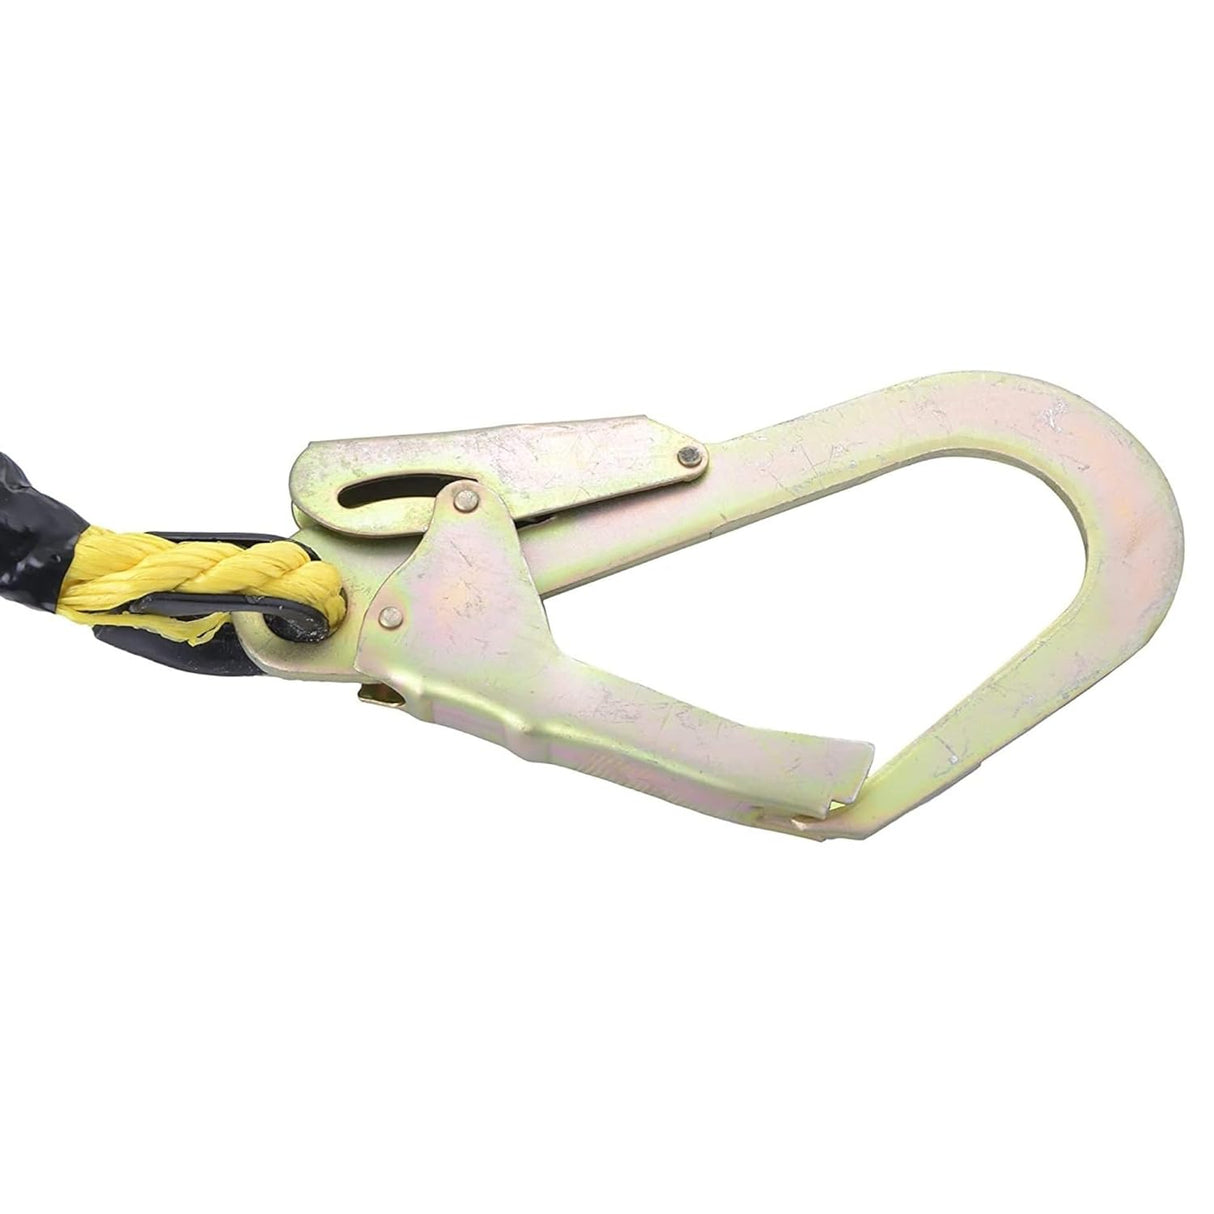 SINGHAL Safety Belt Harness - Full Body Unisex Full Body Adjustable Climbing Harness Safety Belt - Safety Belt Full Body Harness | With 1 Scaffolding Hook